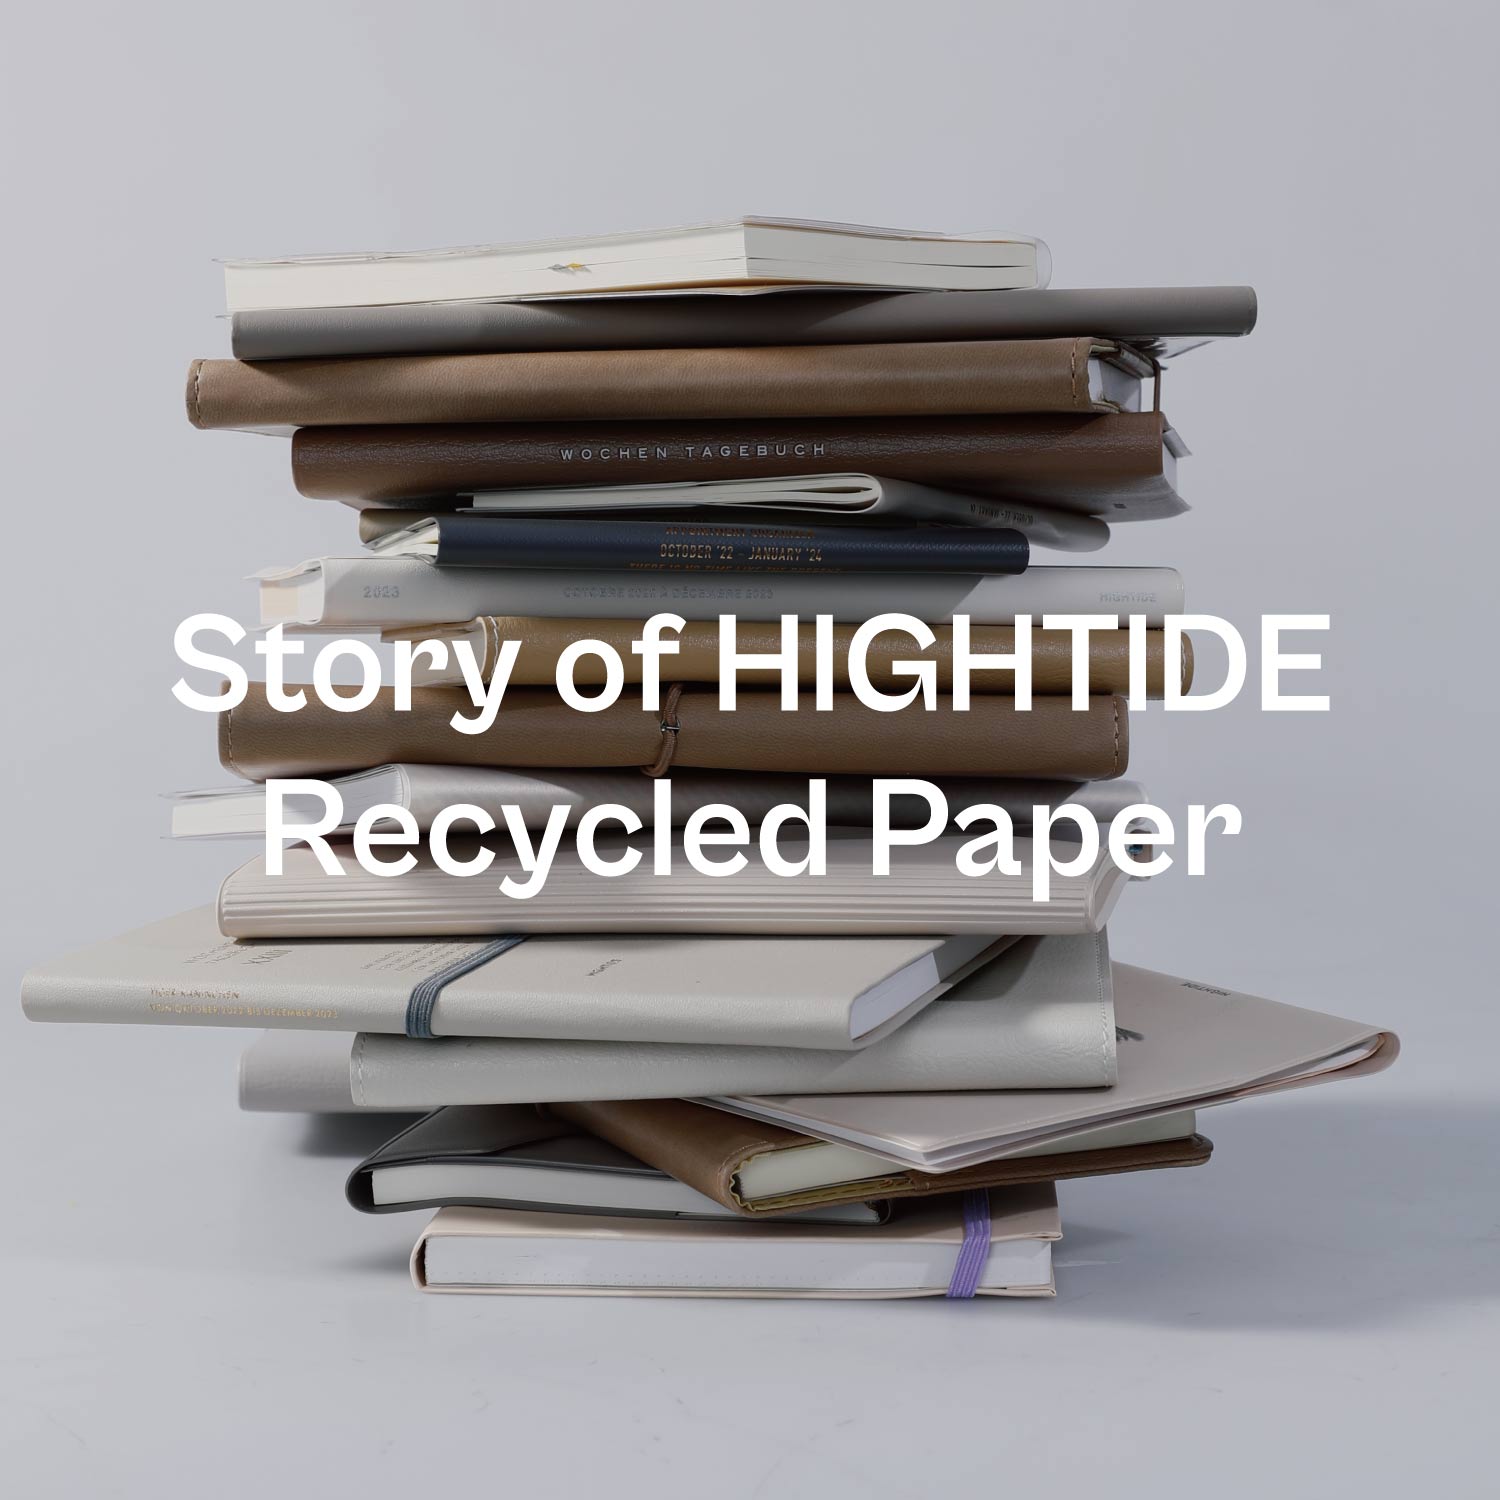 Original Recycled Paper ハイタイド再生紙
が できるまで